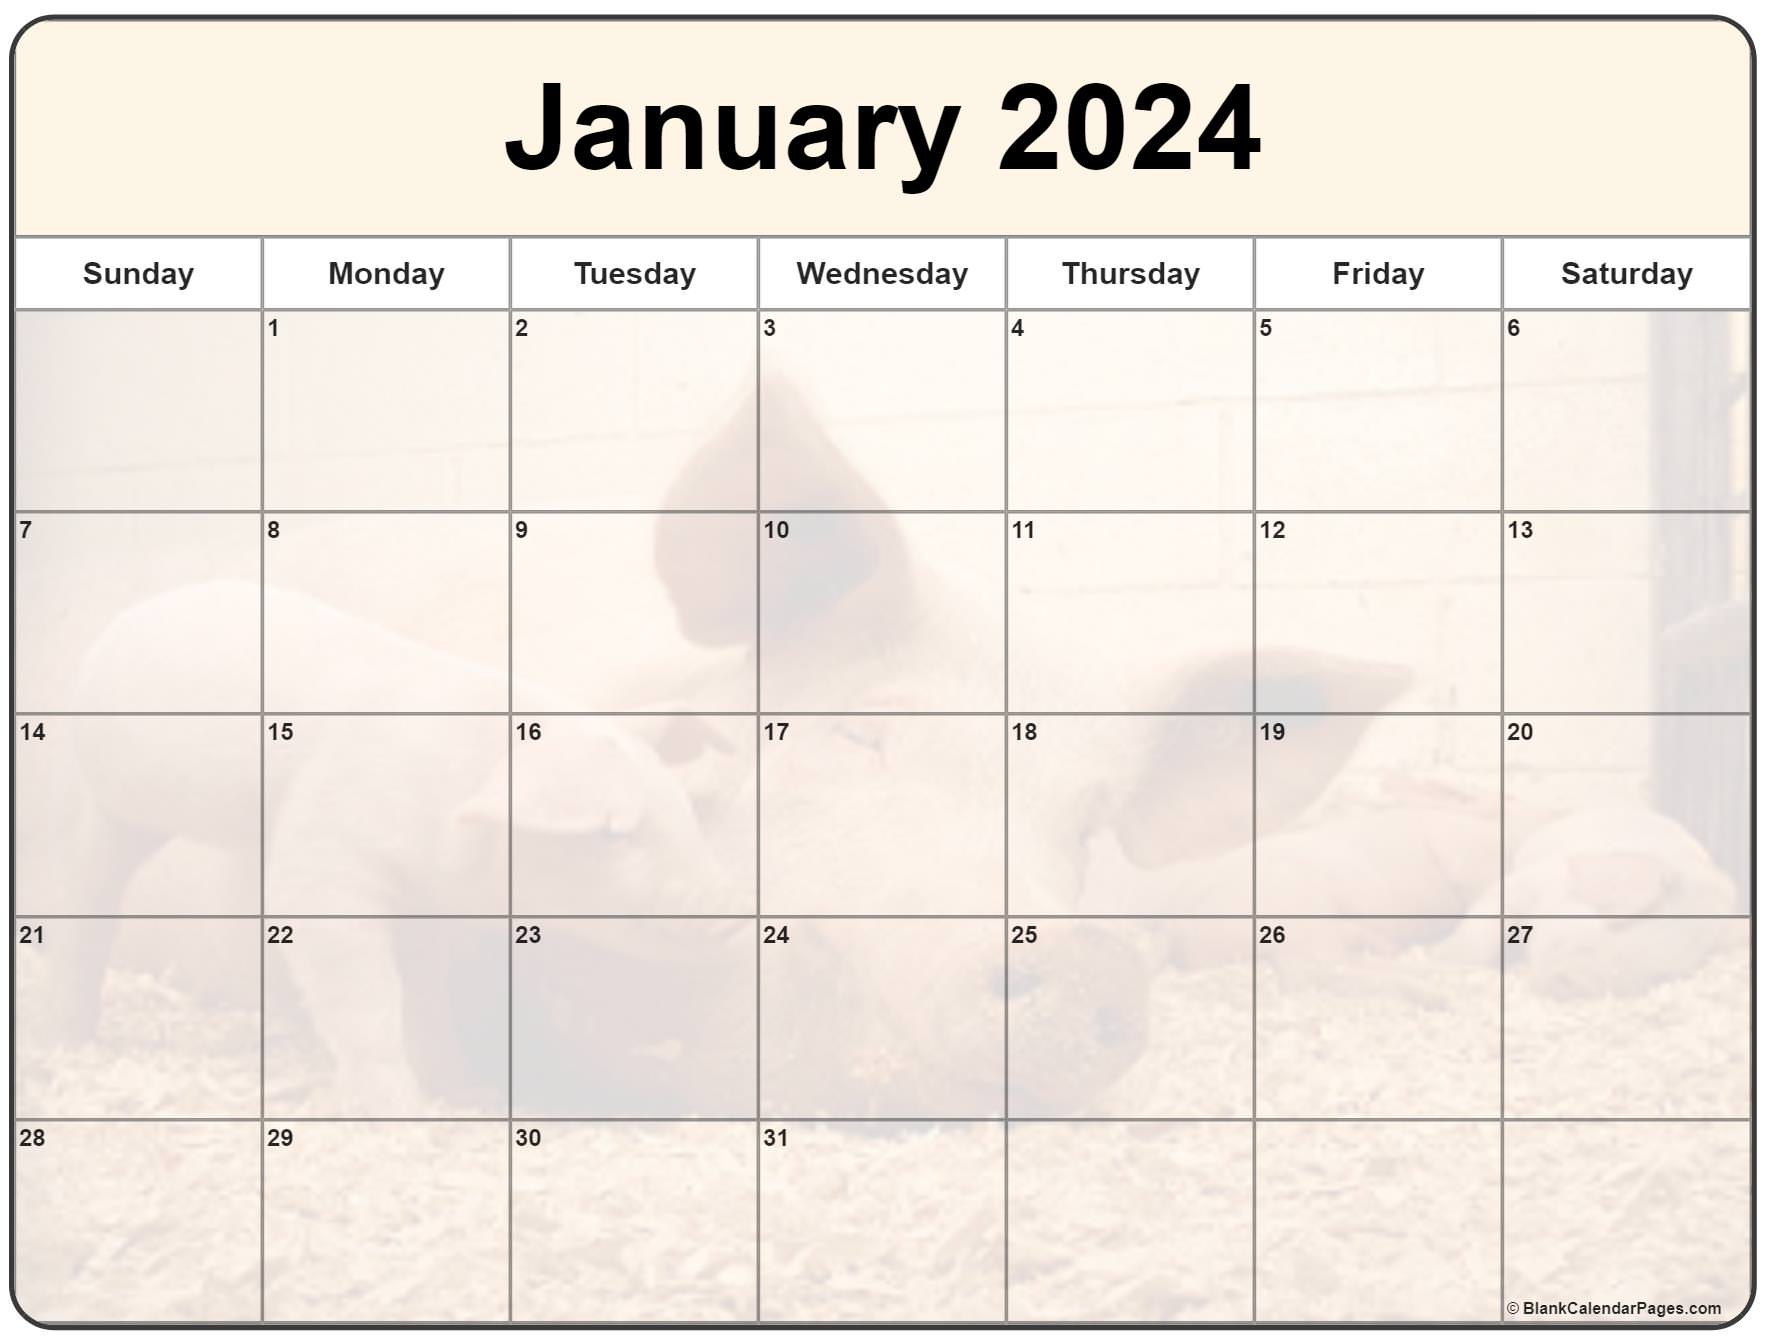 Fun 2024 Calendars Mimi Sharai